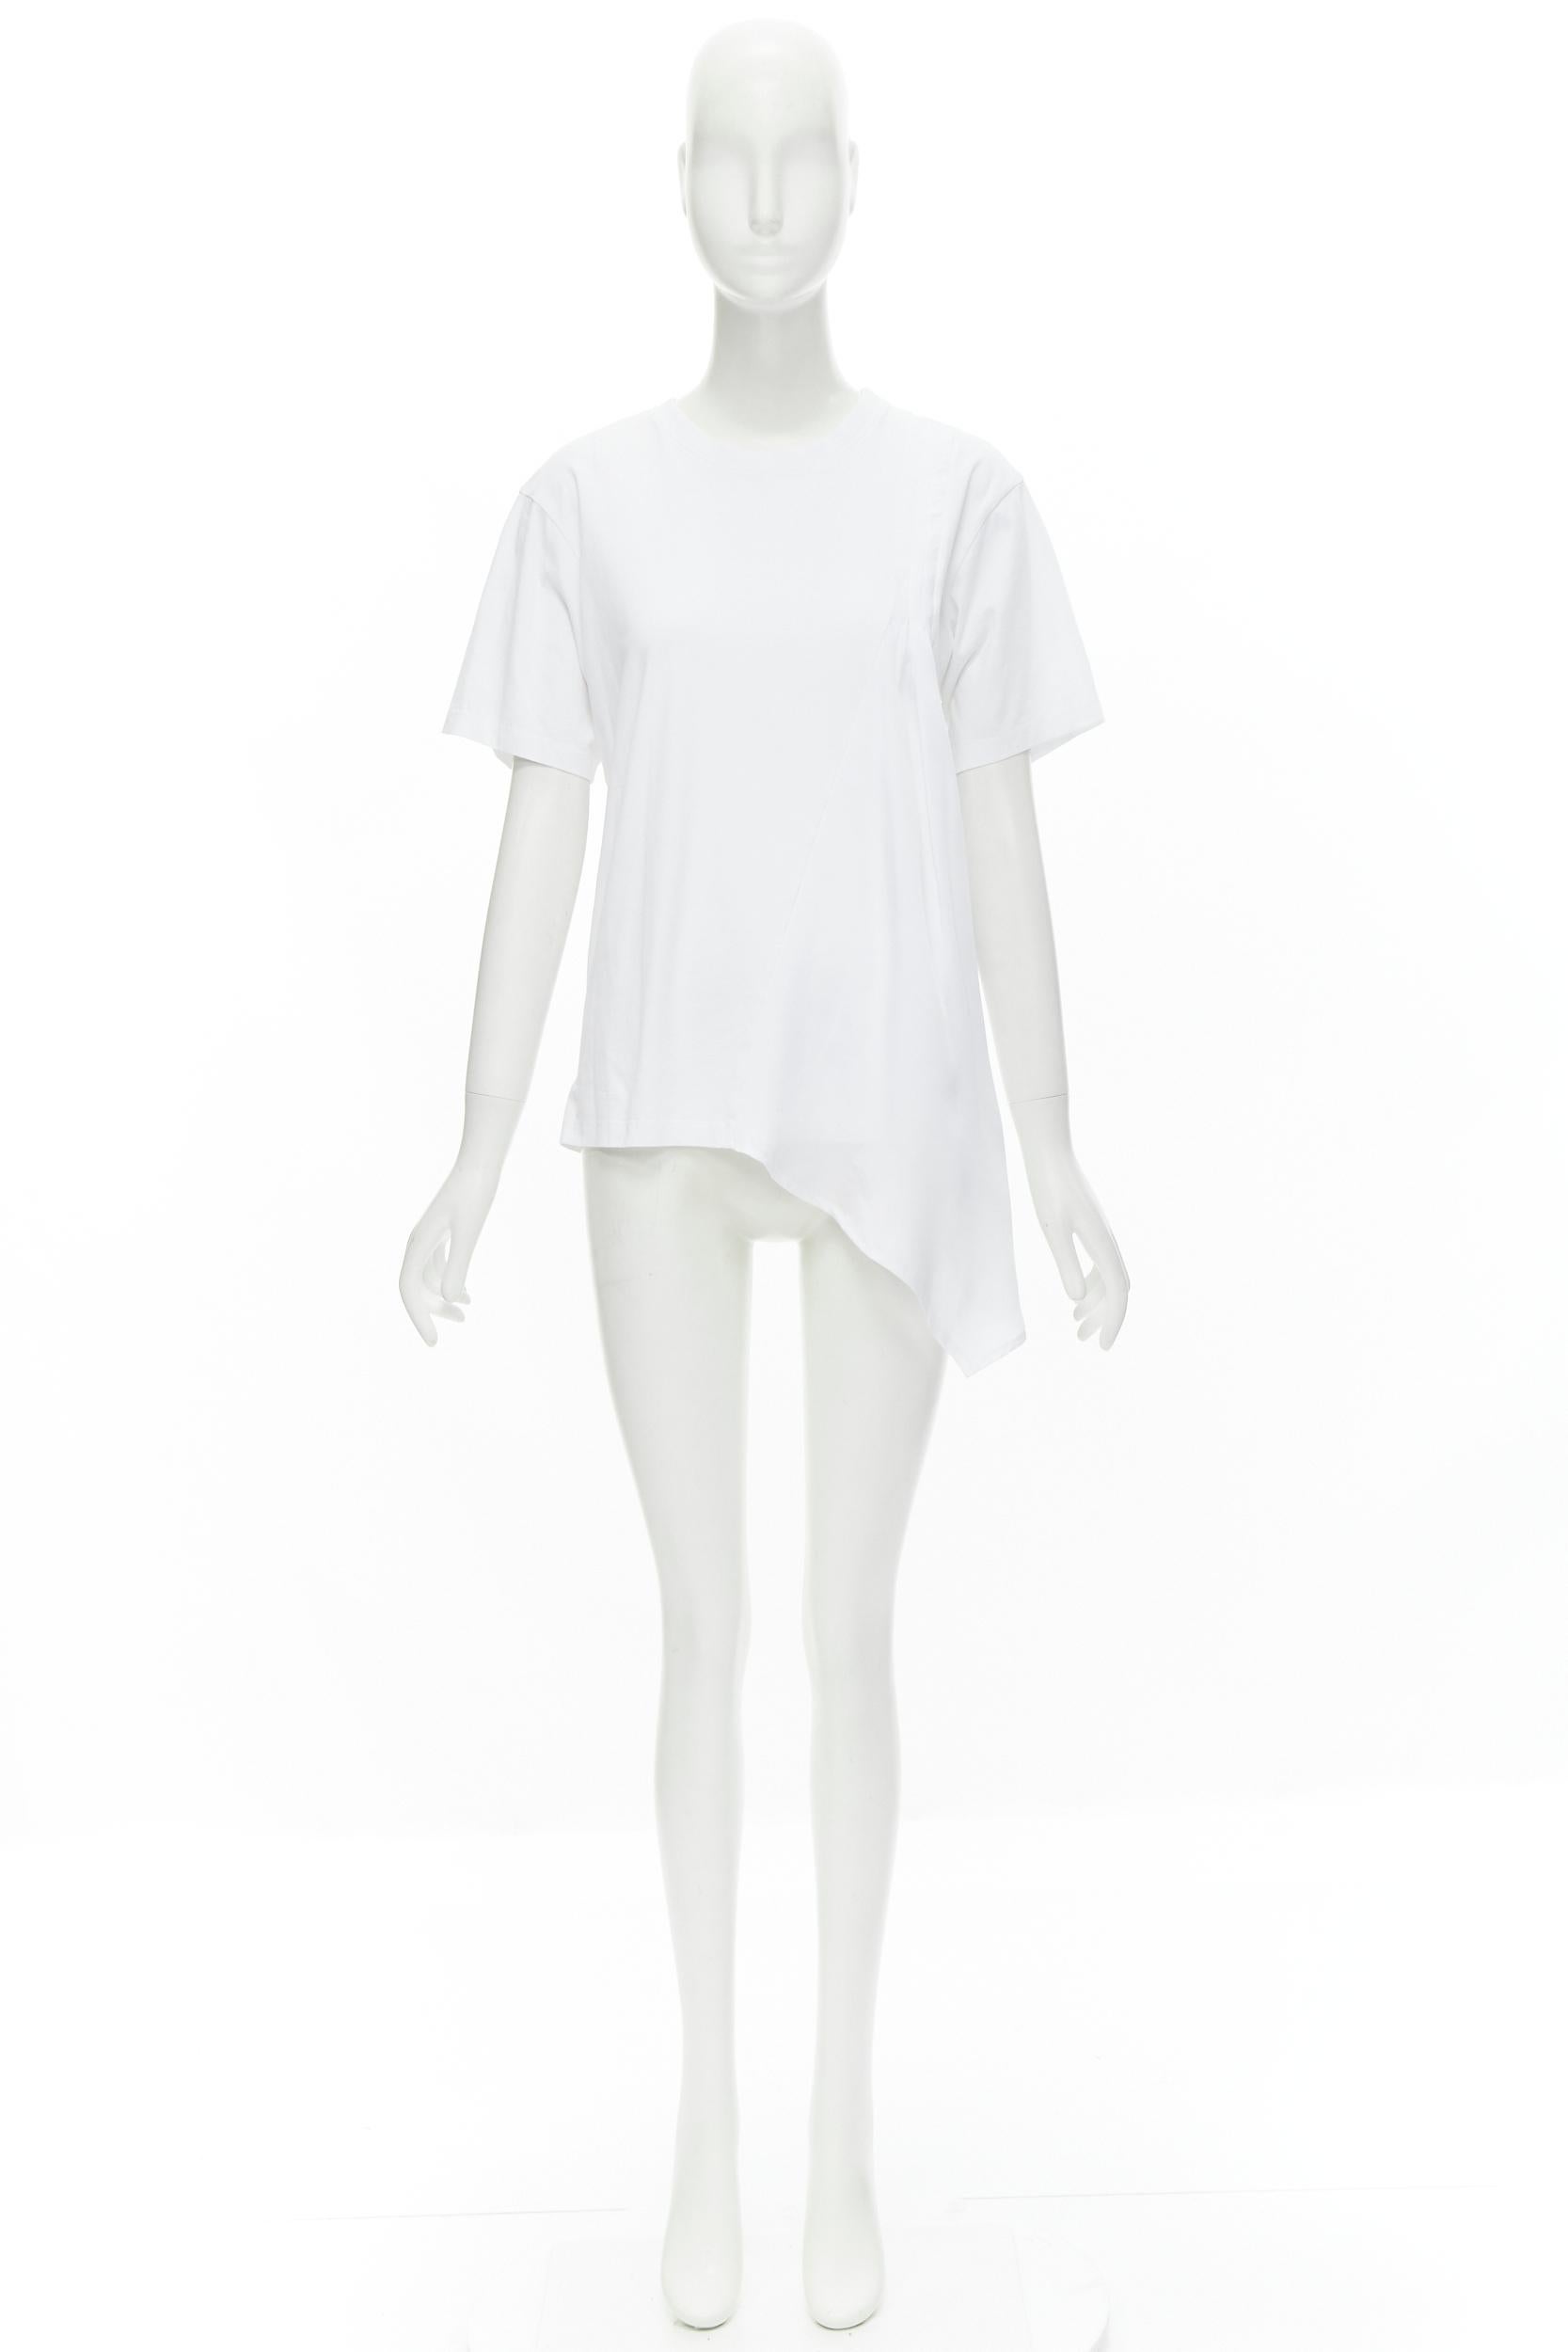 VVB VICTORIA BECKHAM 100% cotton polyester insert asymmetric t-shirt S For Sale 2